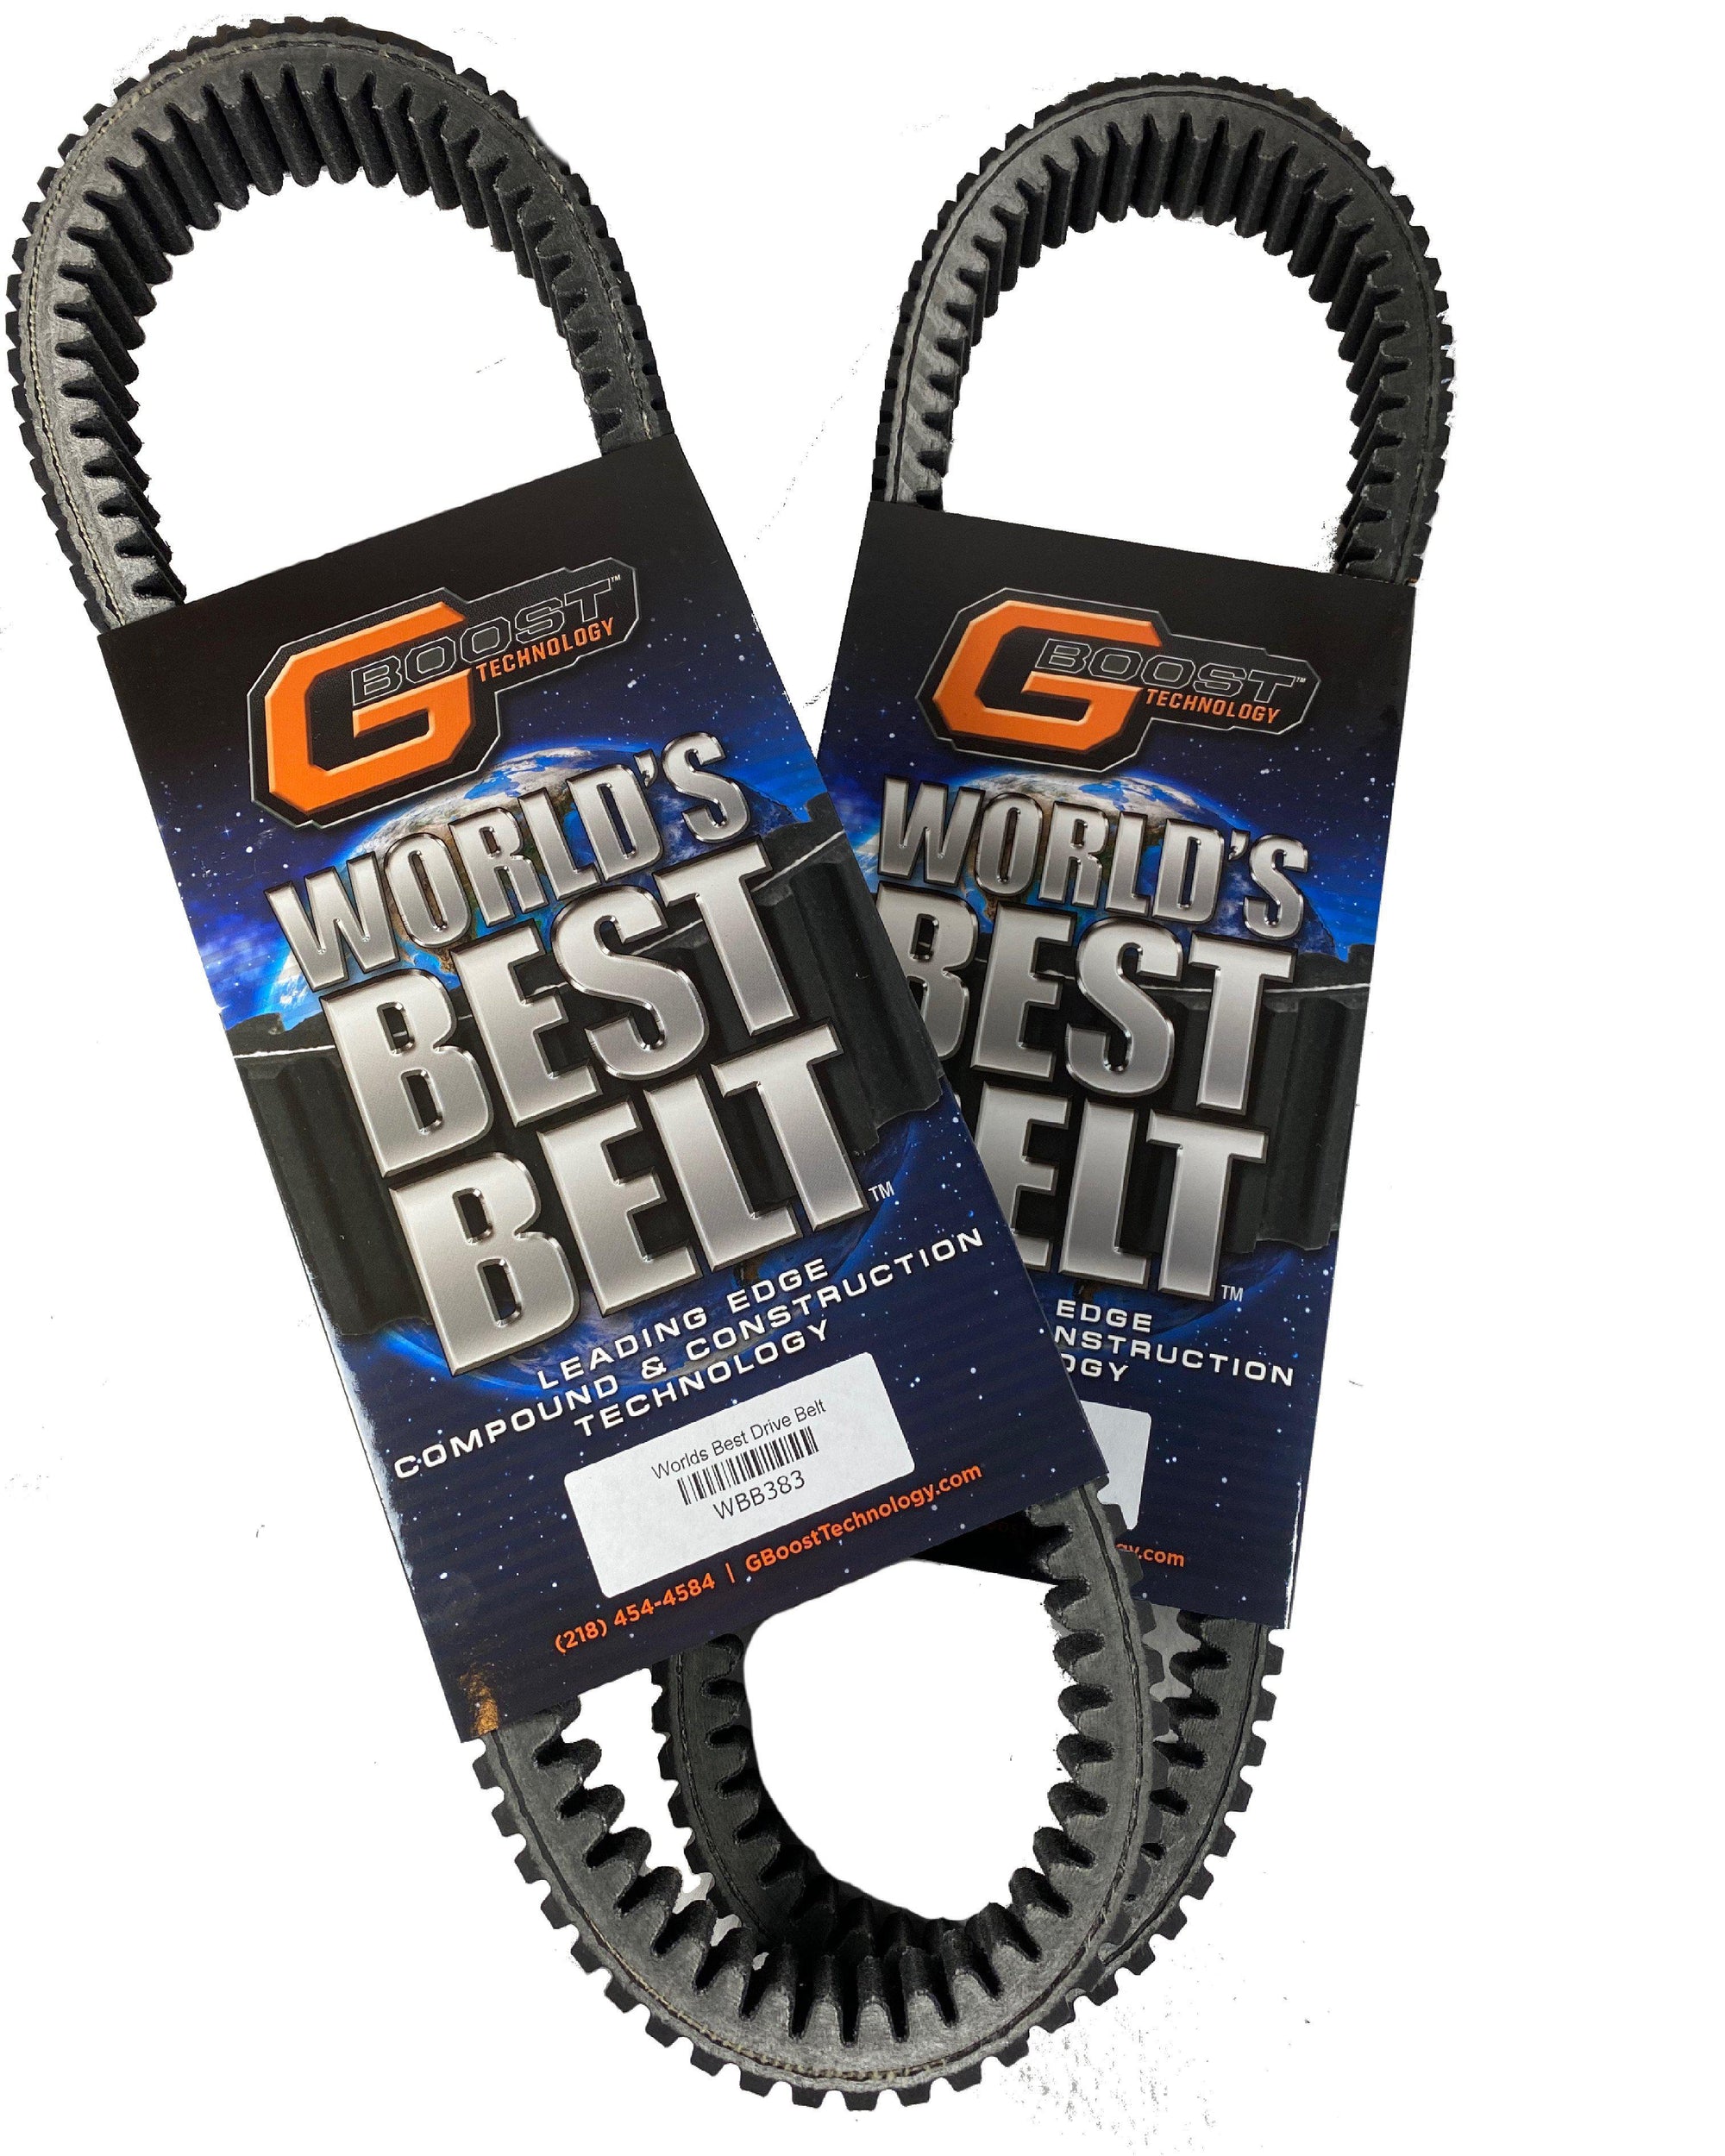 2x Maverick X3 Drive Belt - World's Best Belt!-Belt-GBoost-Black Market UTV